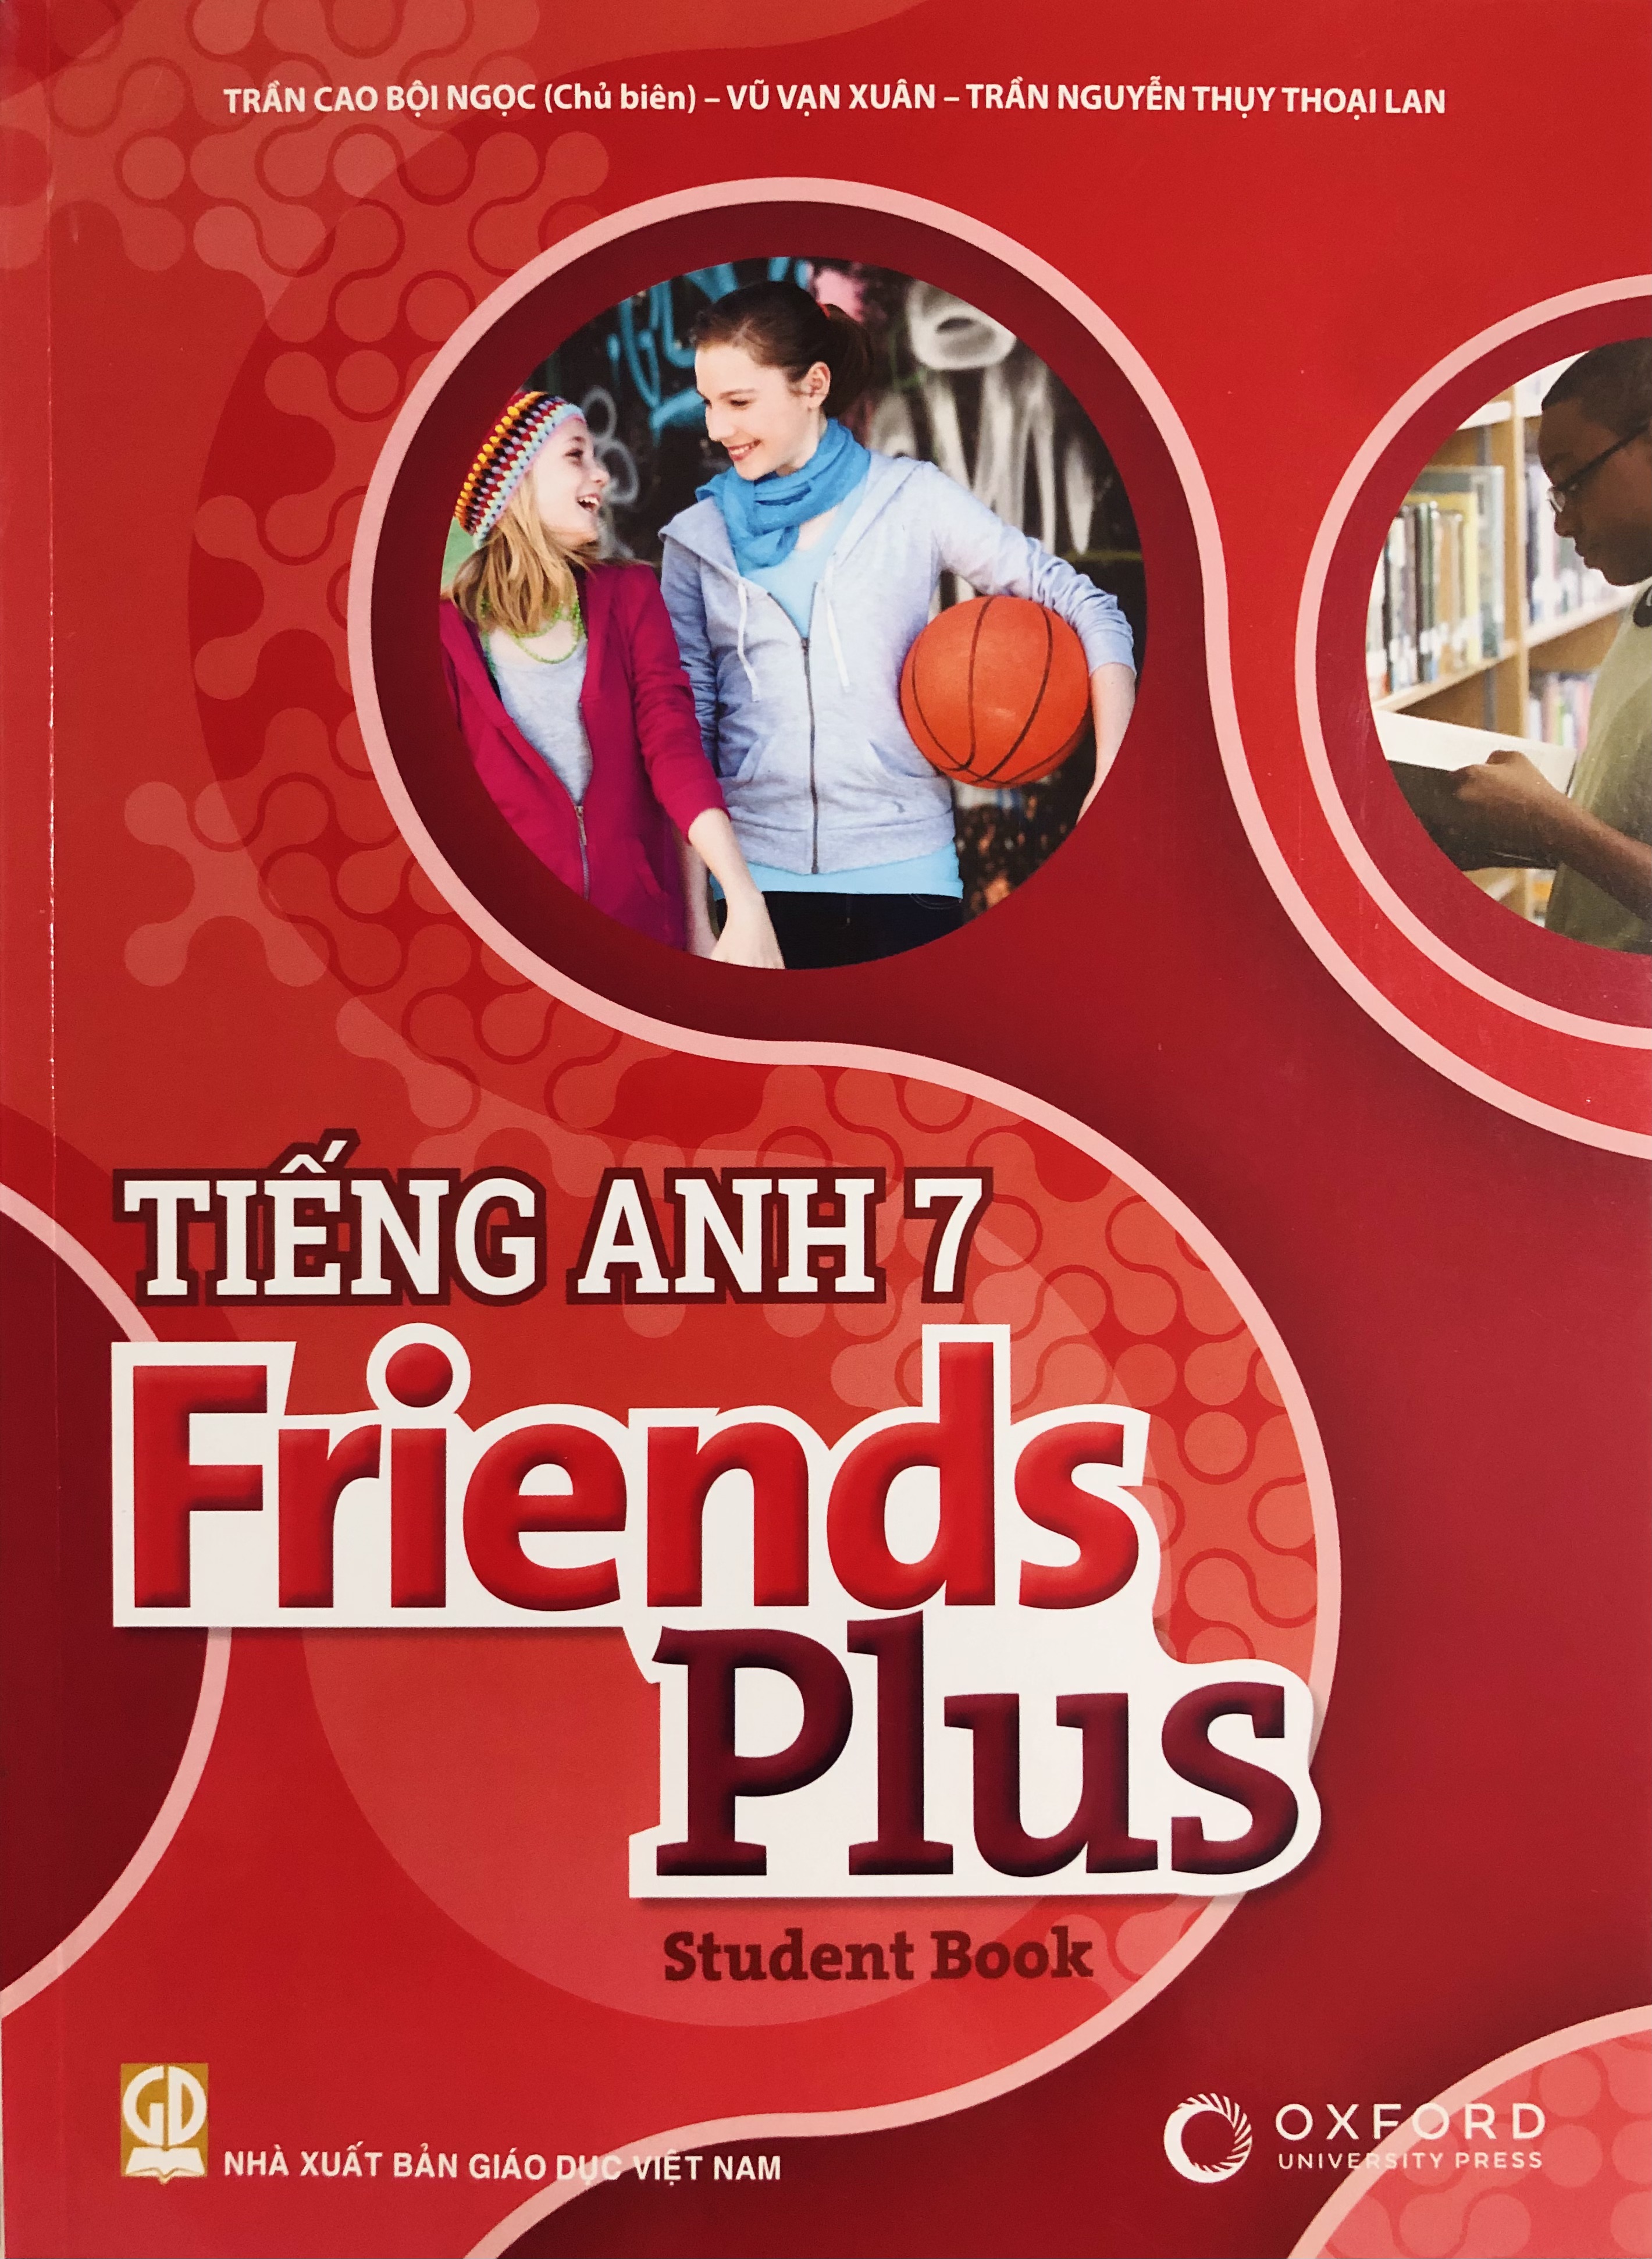 Friends Plus 7 - Student Book